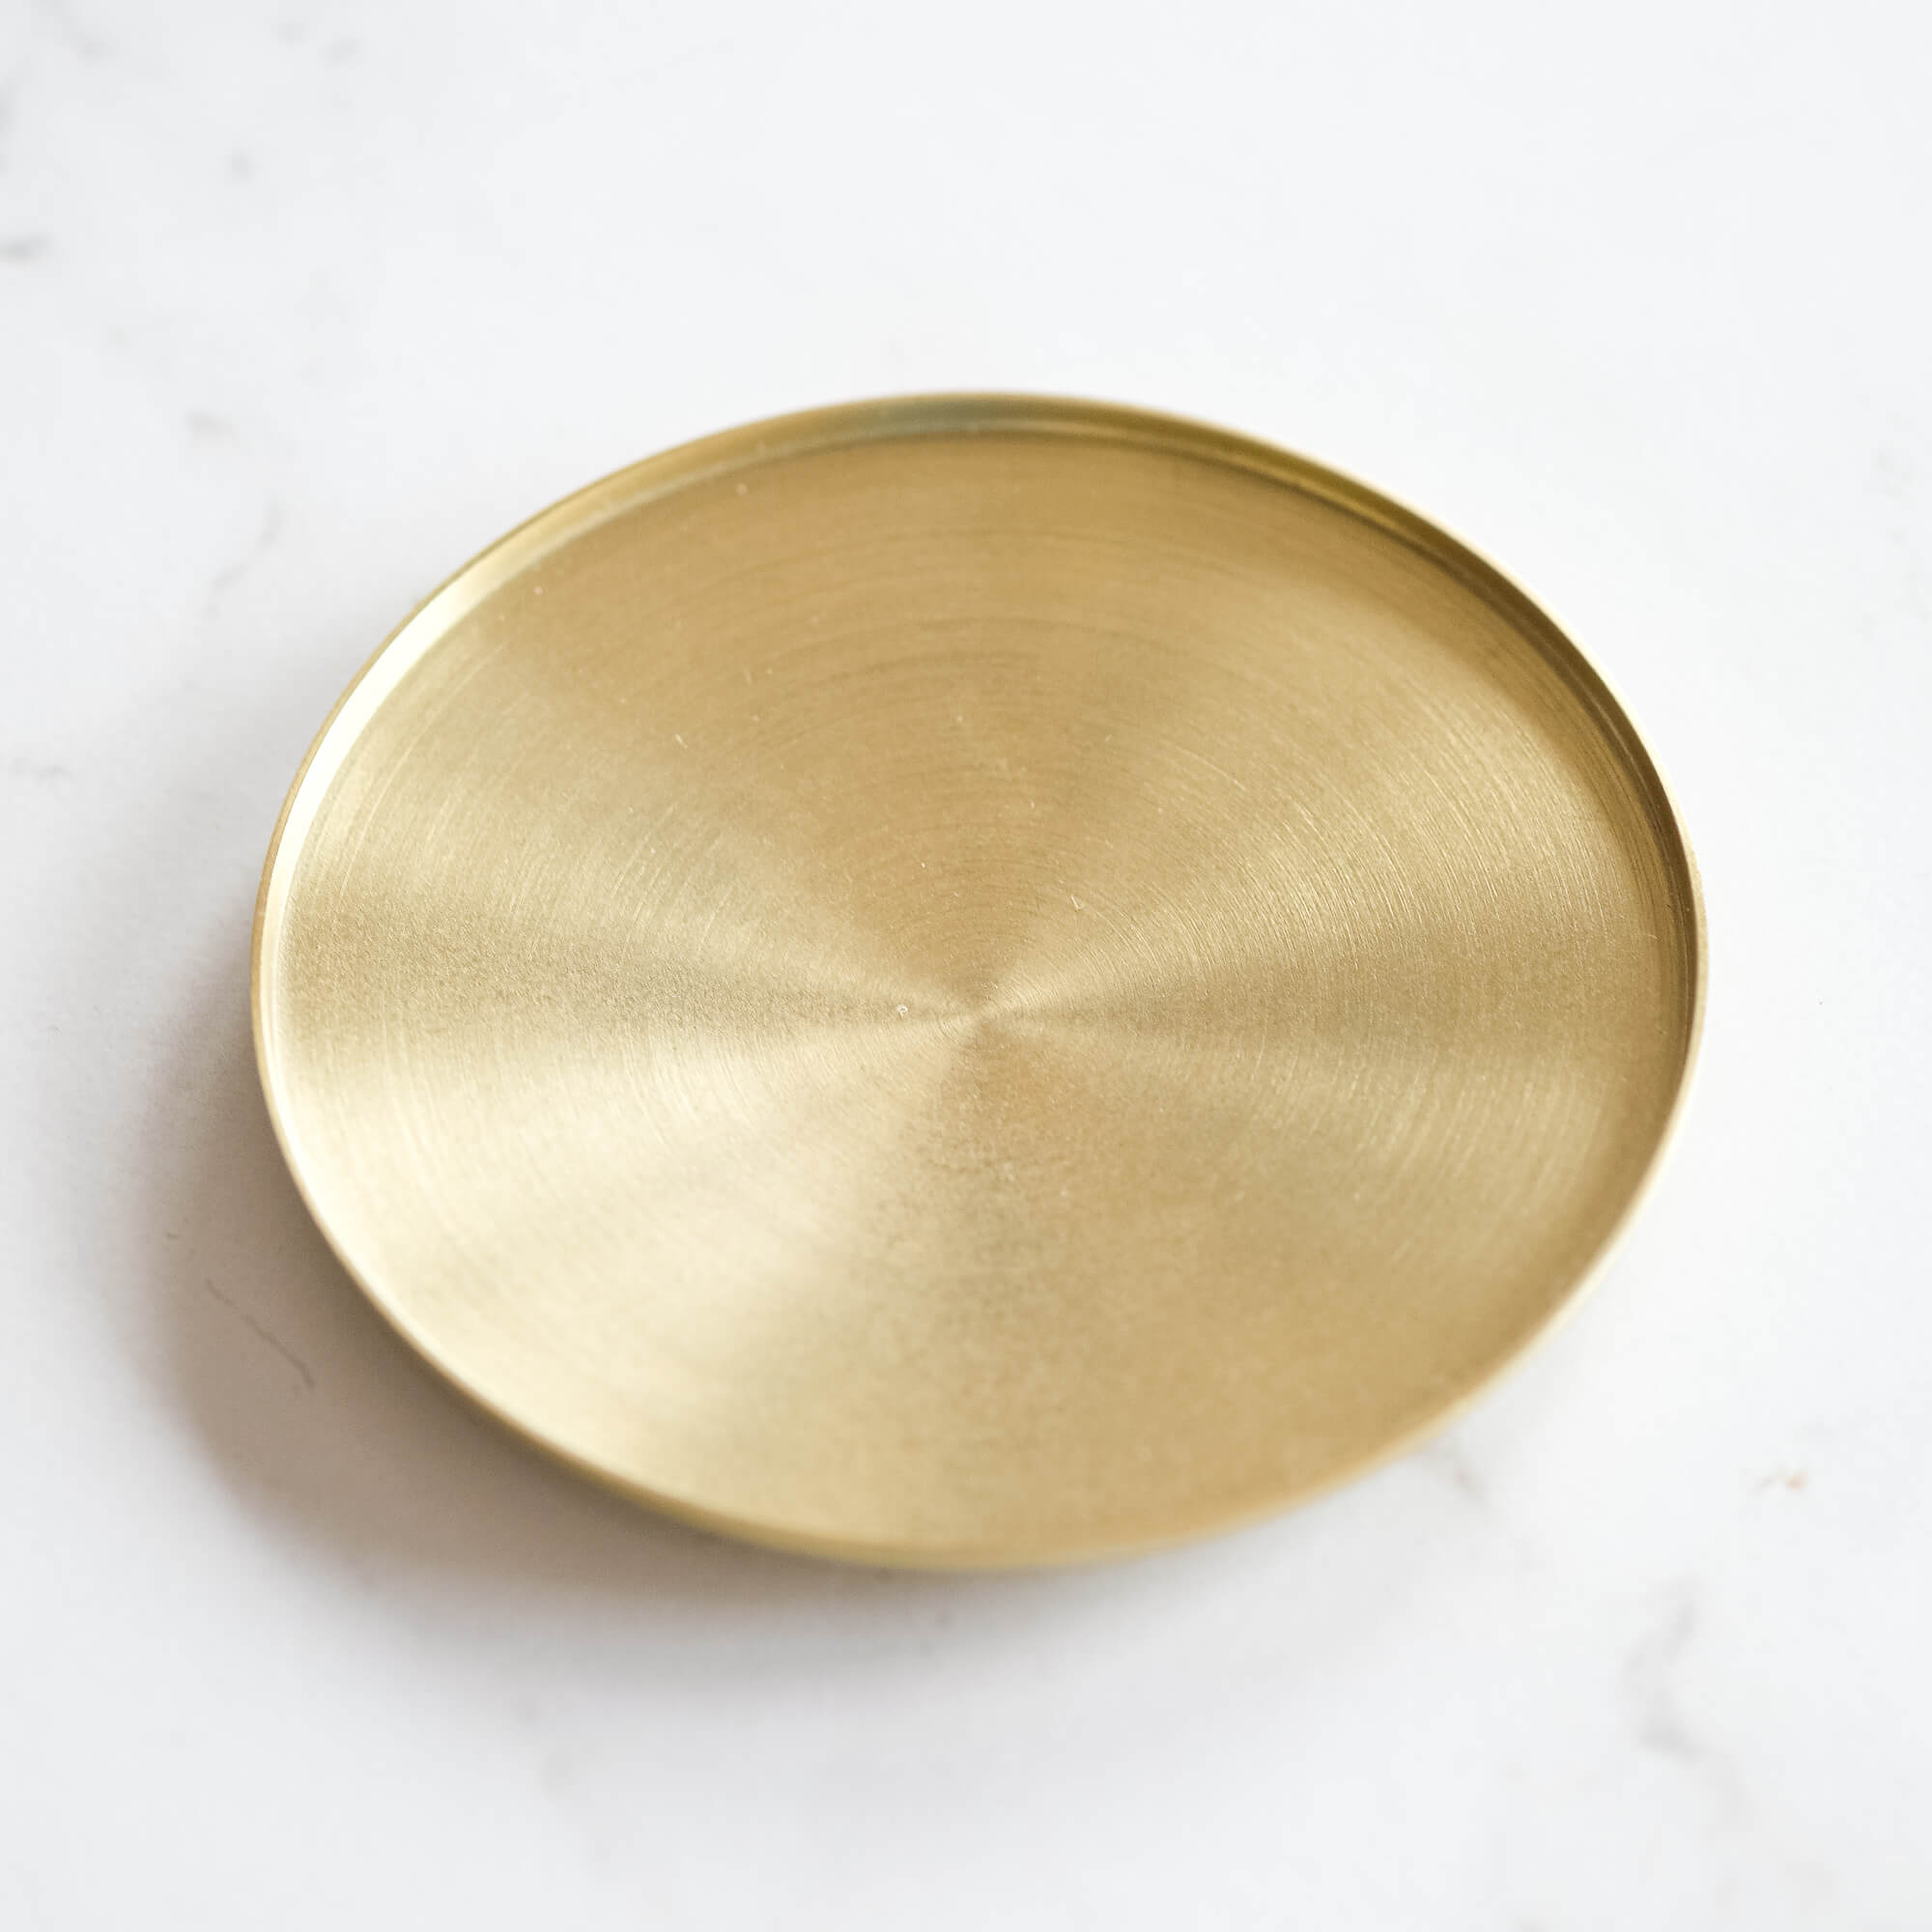 Spin - Handmade Brass Dish - tomsstudioSpin - Handmade Brass Dish